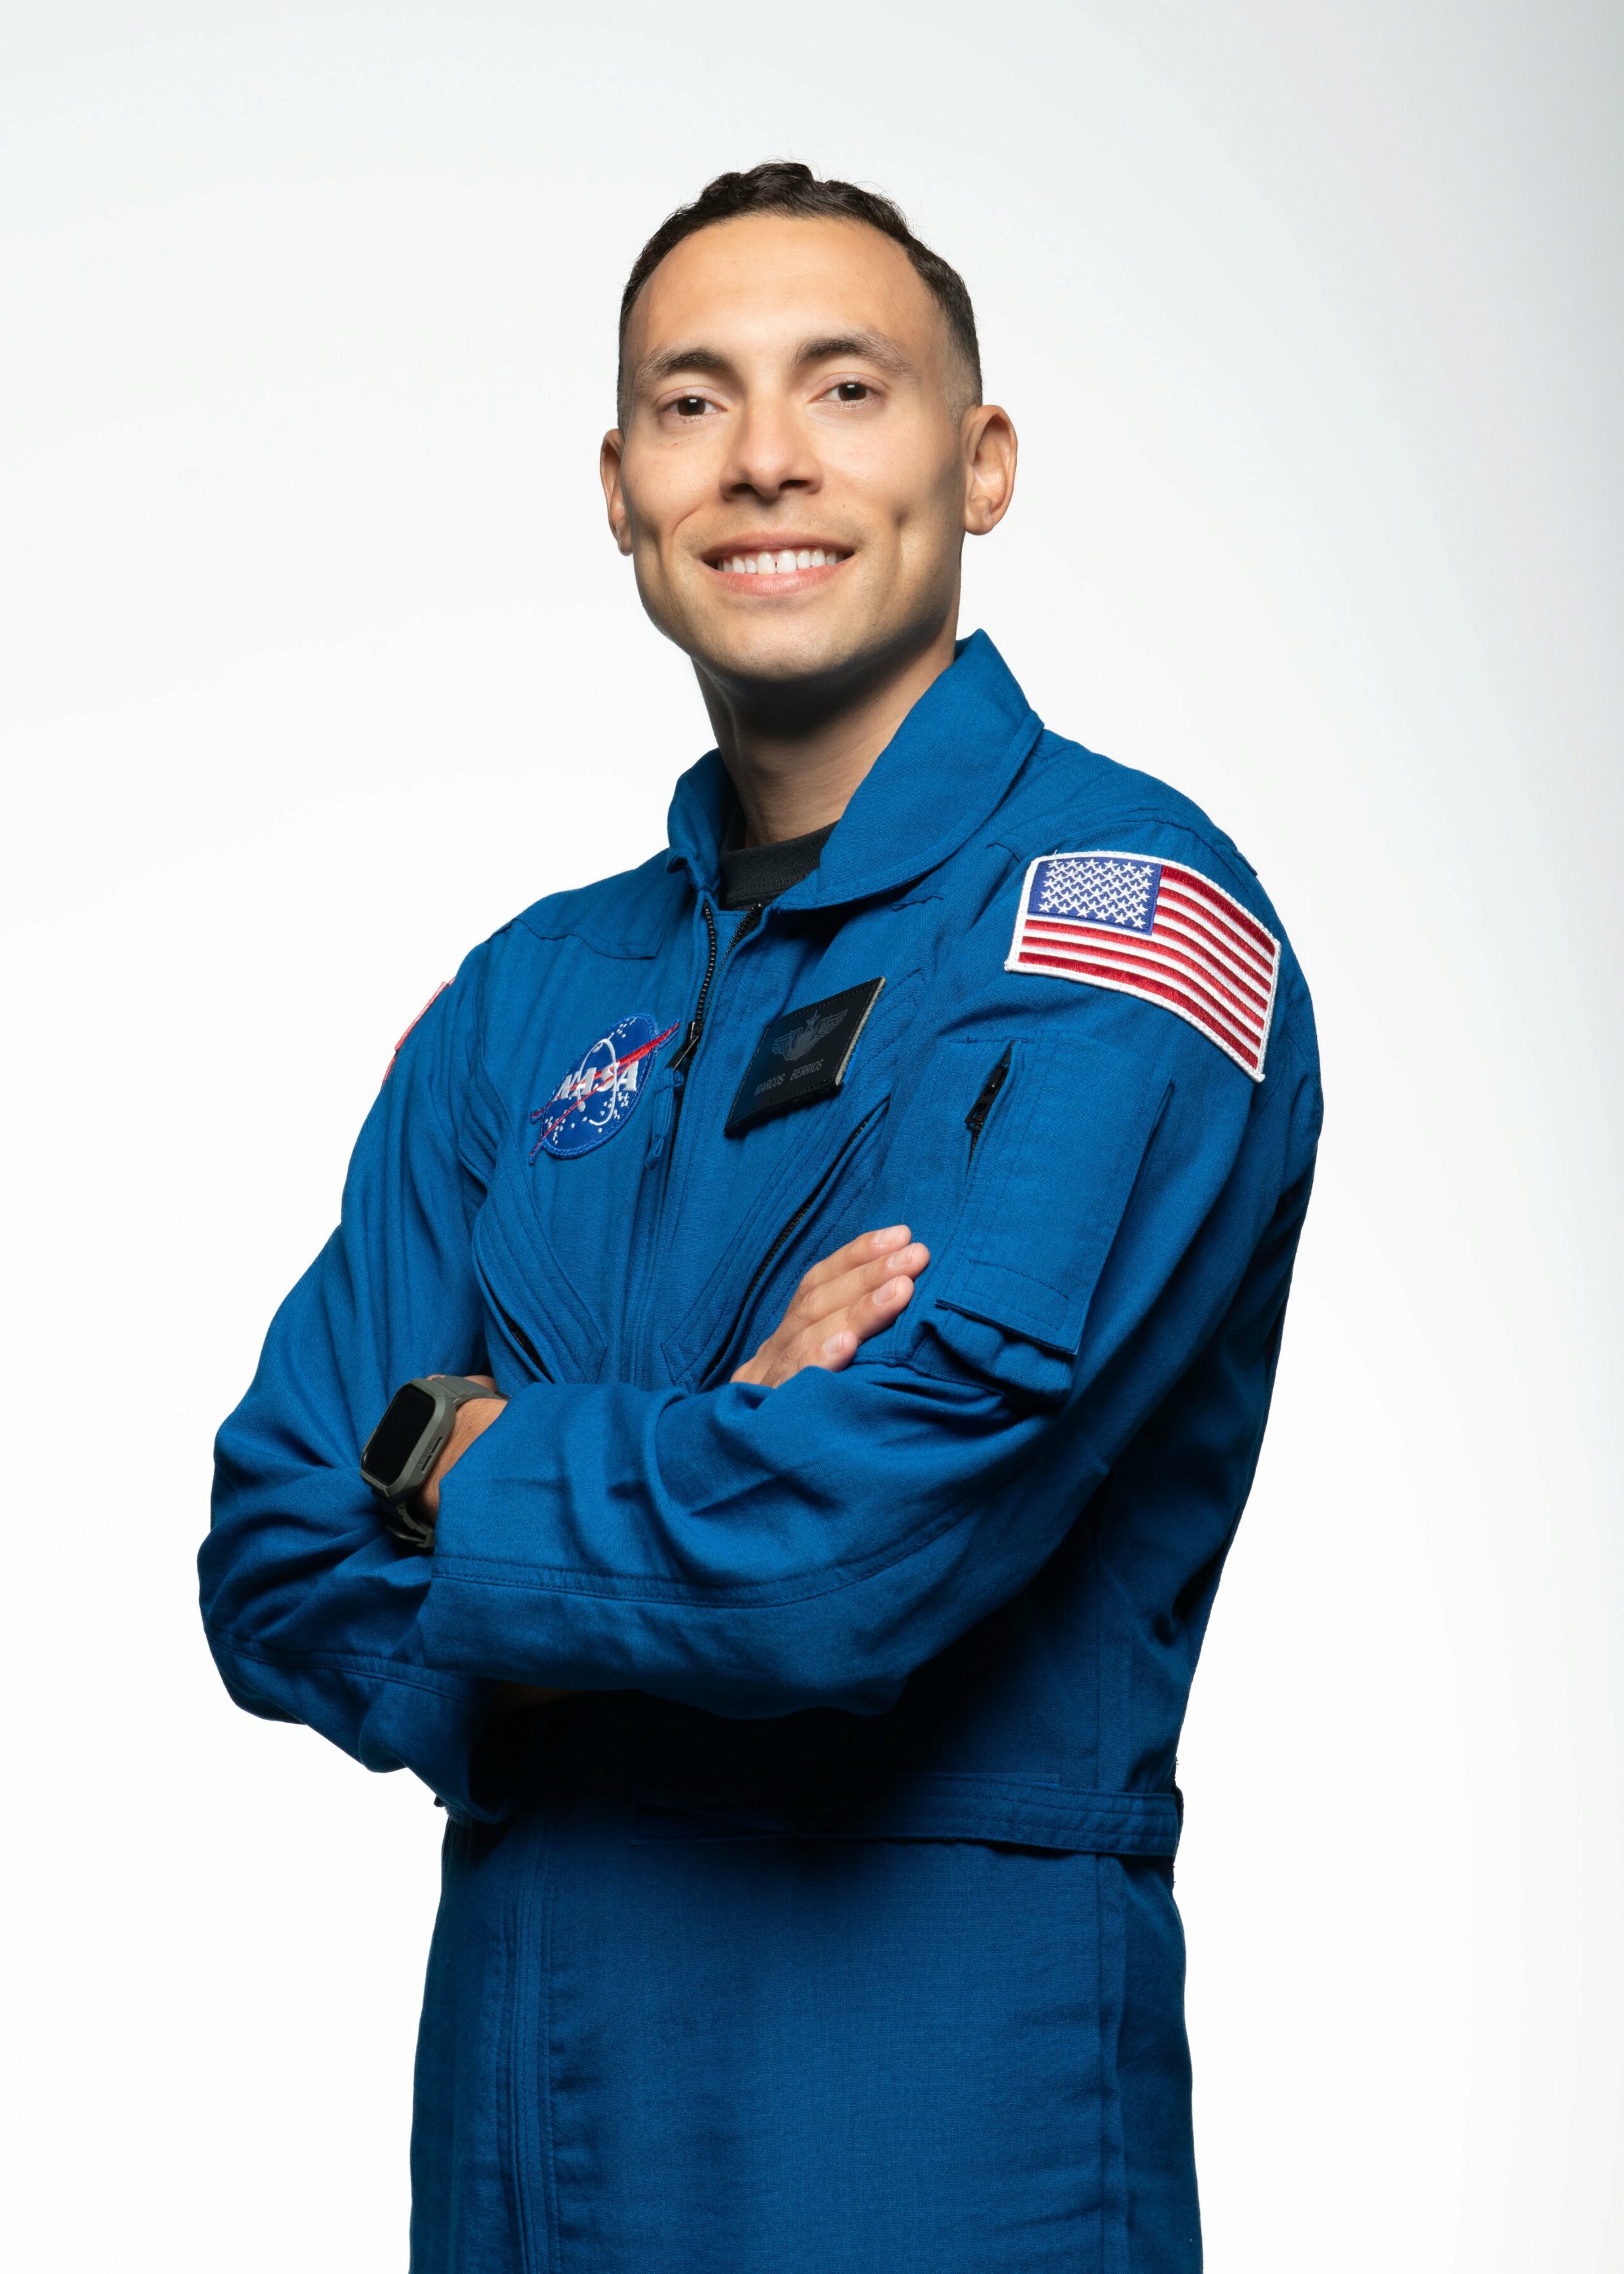 Classe 2021 des candidats astronautes de la NASA 910